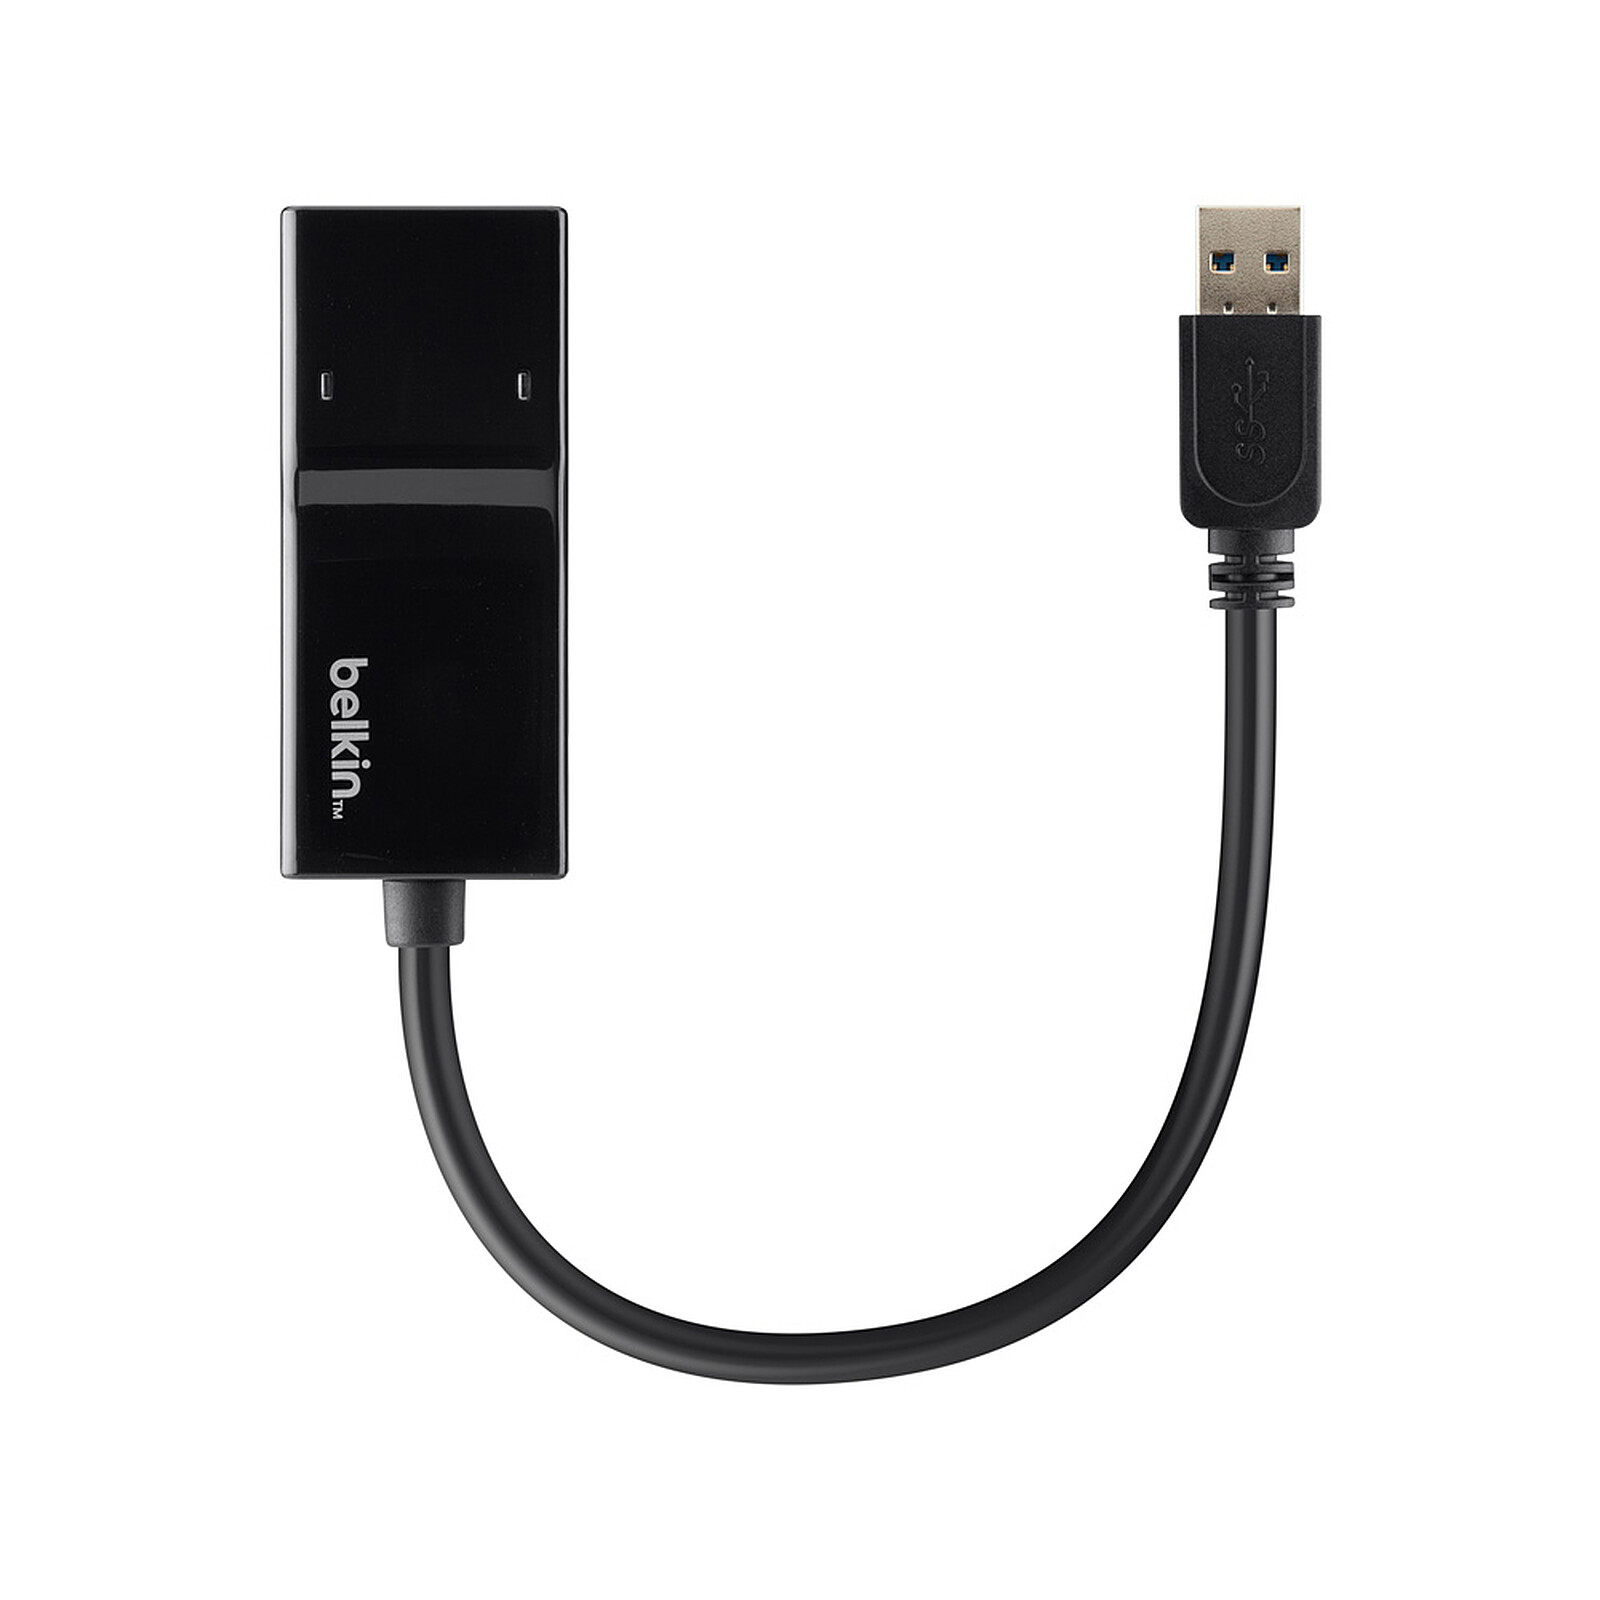 Belkin USB 3.0-zu-Gigabit-Ethernet-Adapter